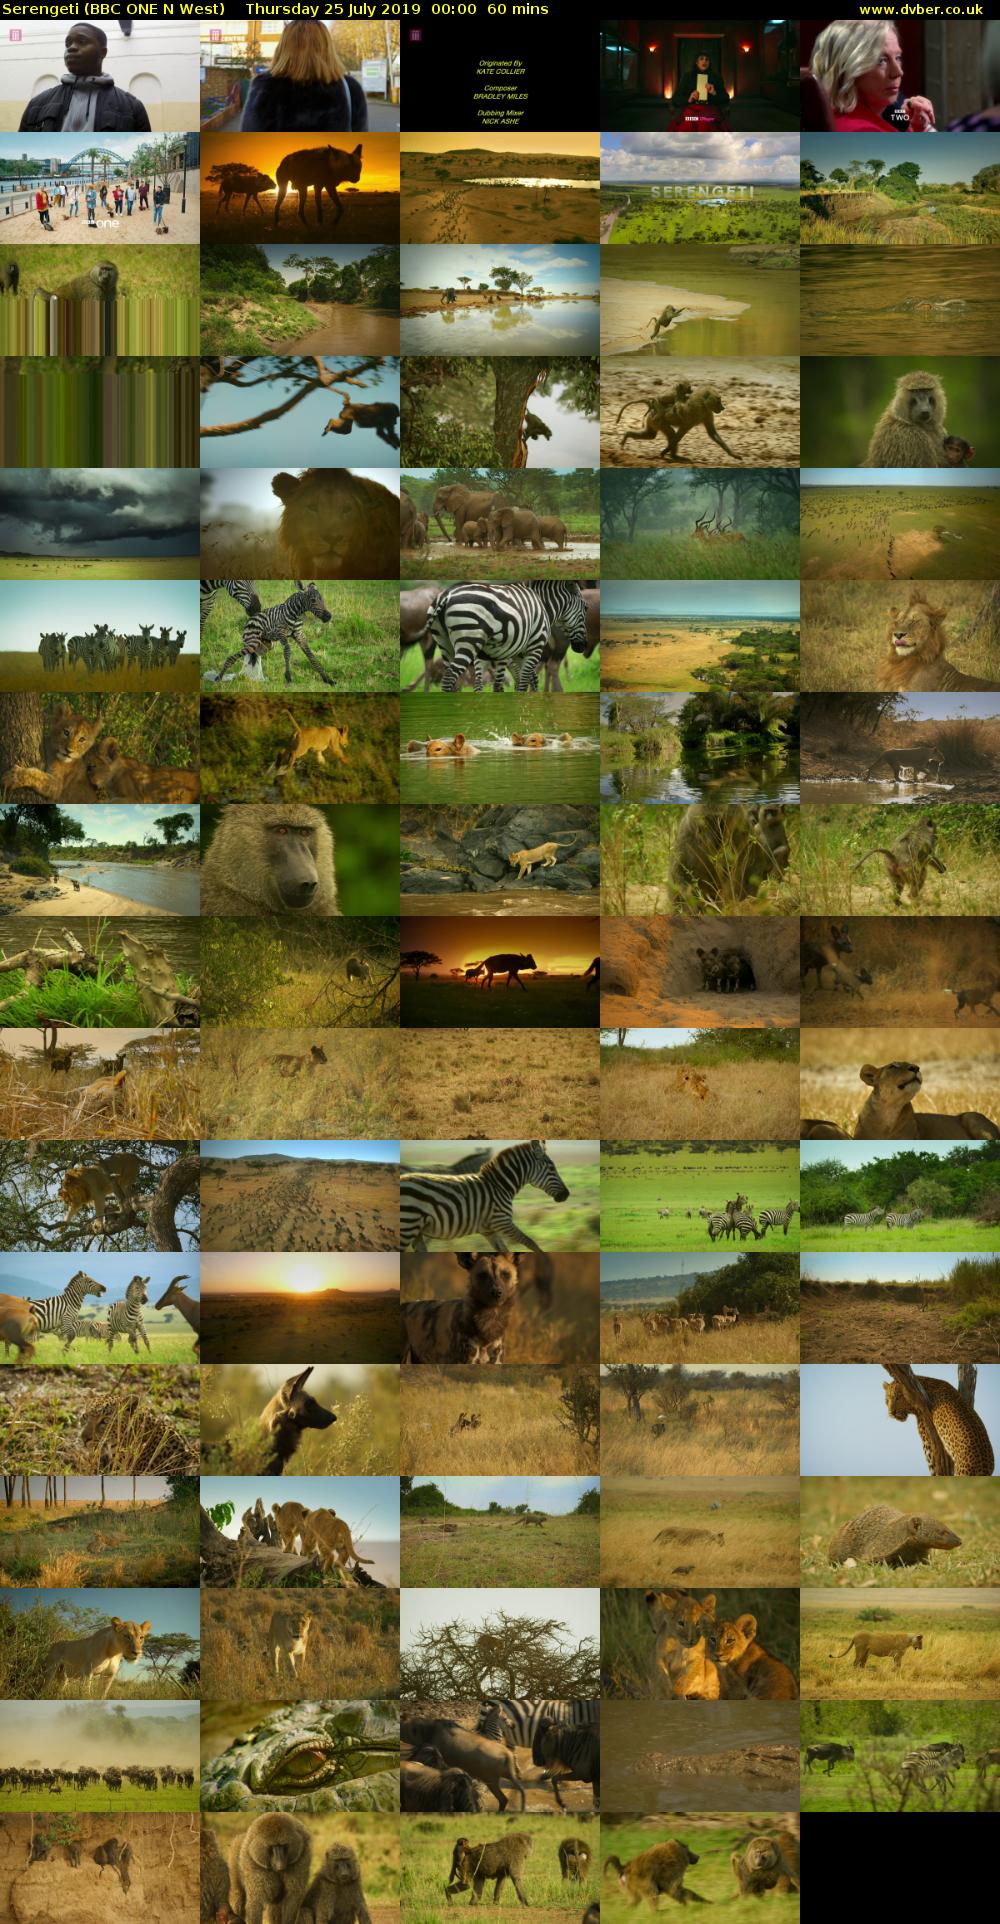 Serengeti (BBC ONE N West) Thursday 25 July 2019 00:00 - 01:00